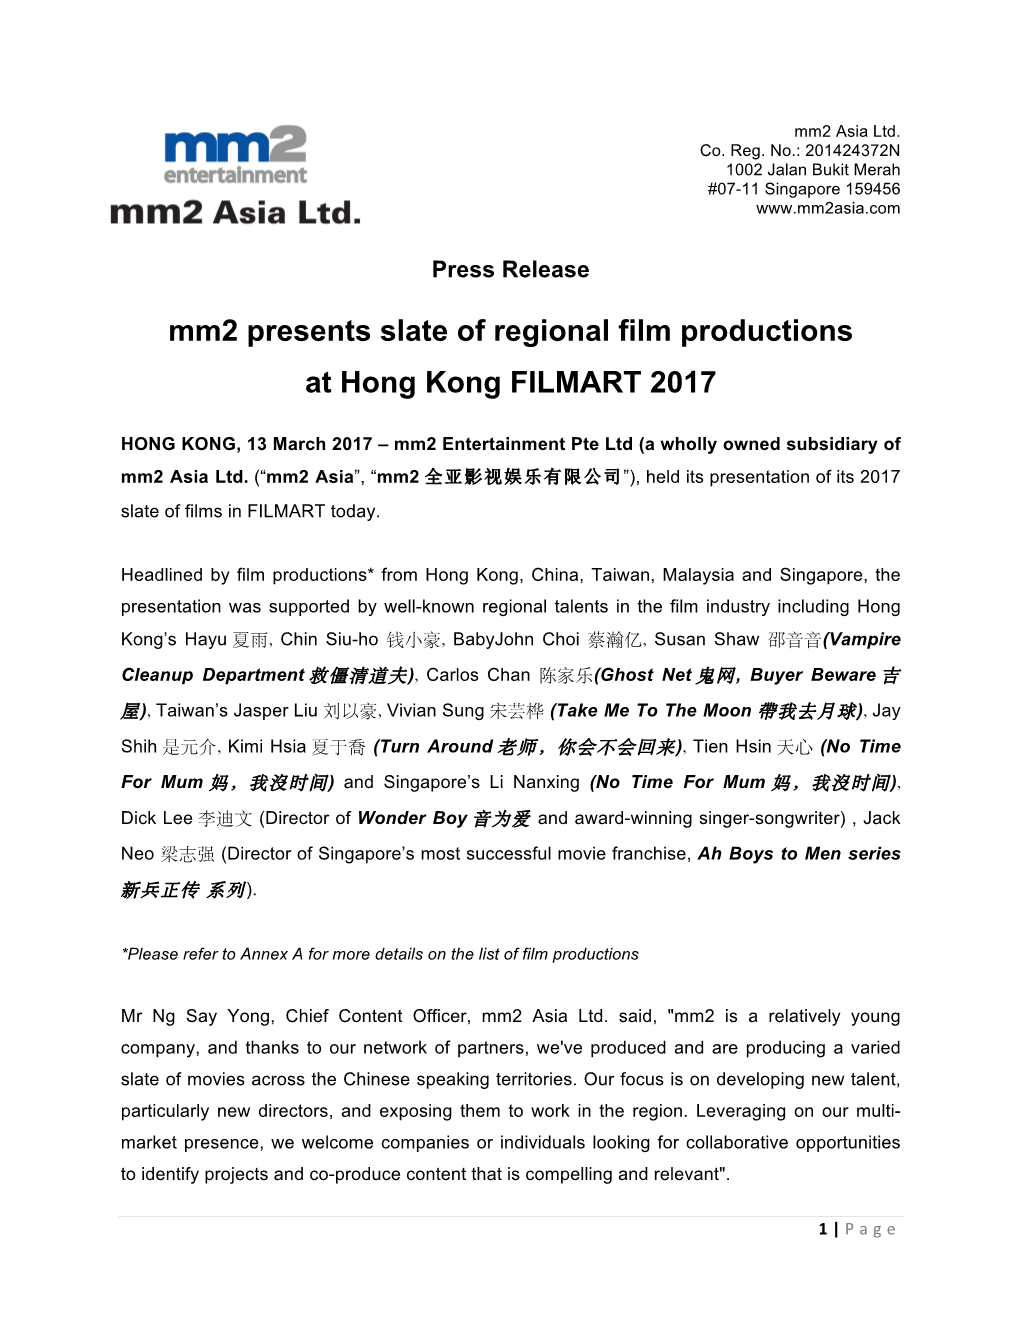 Mm2 Presents Slate of Regional Film Productions at Hong Kong FILMART 2017